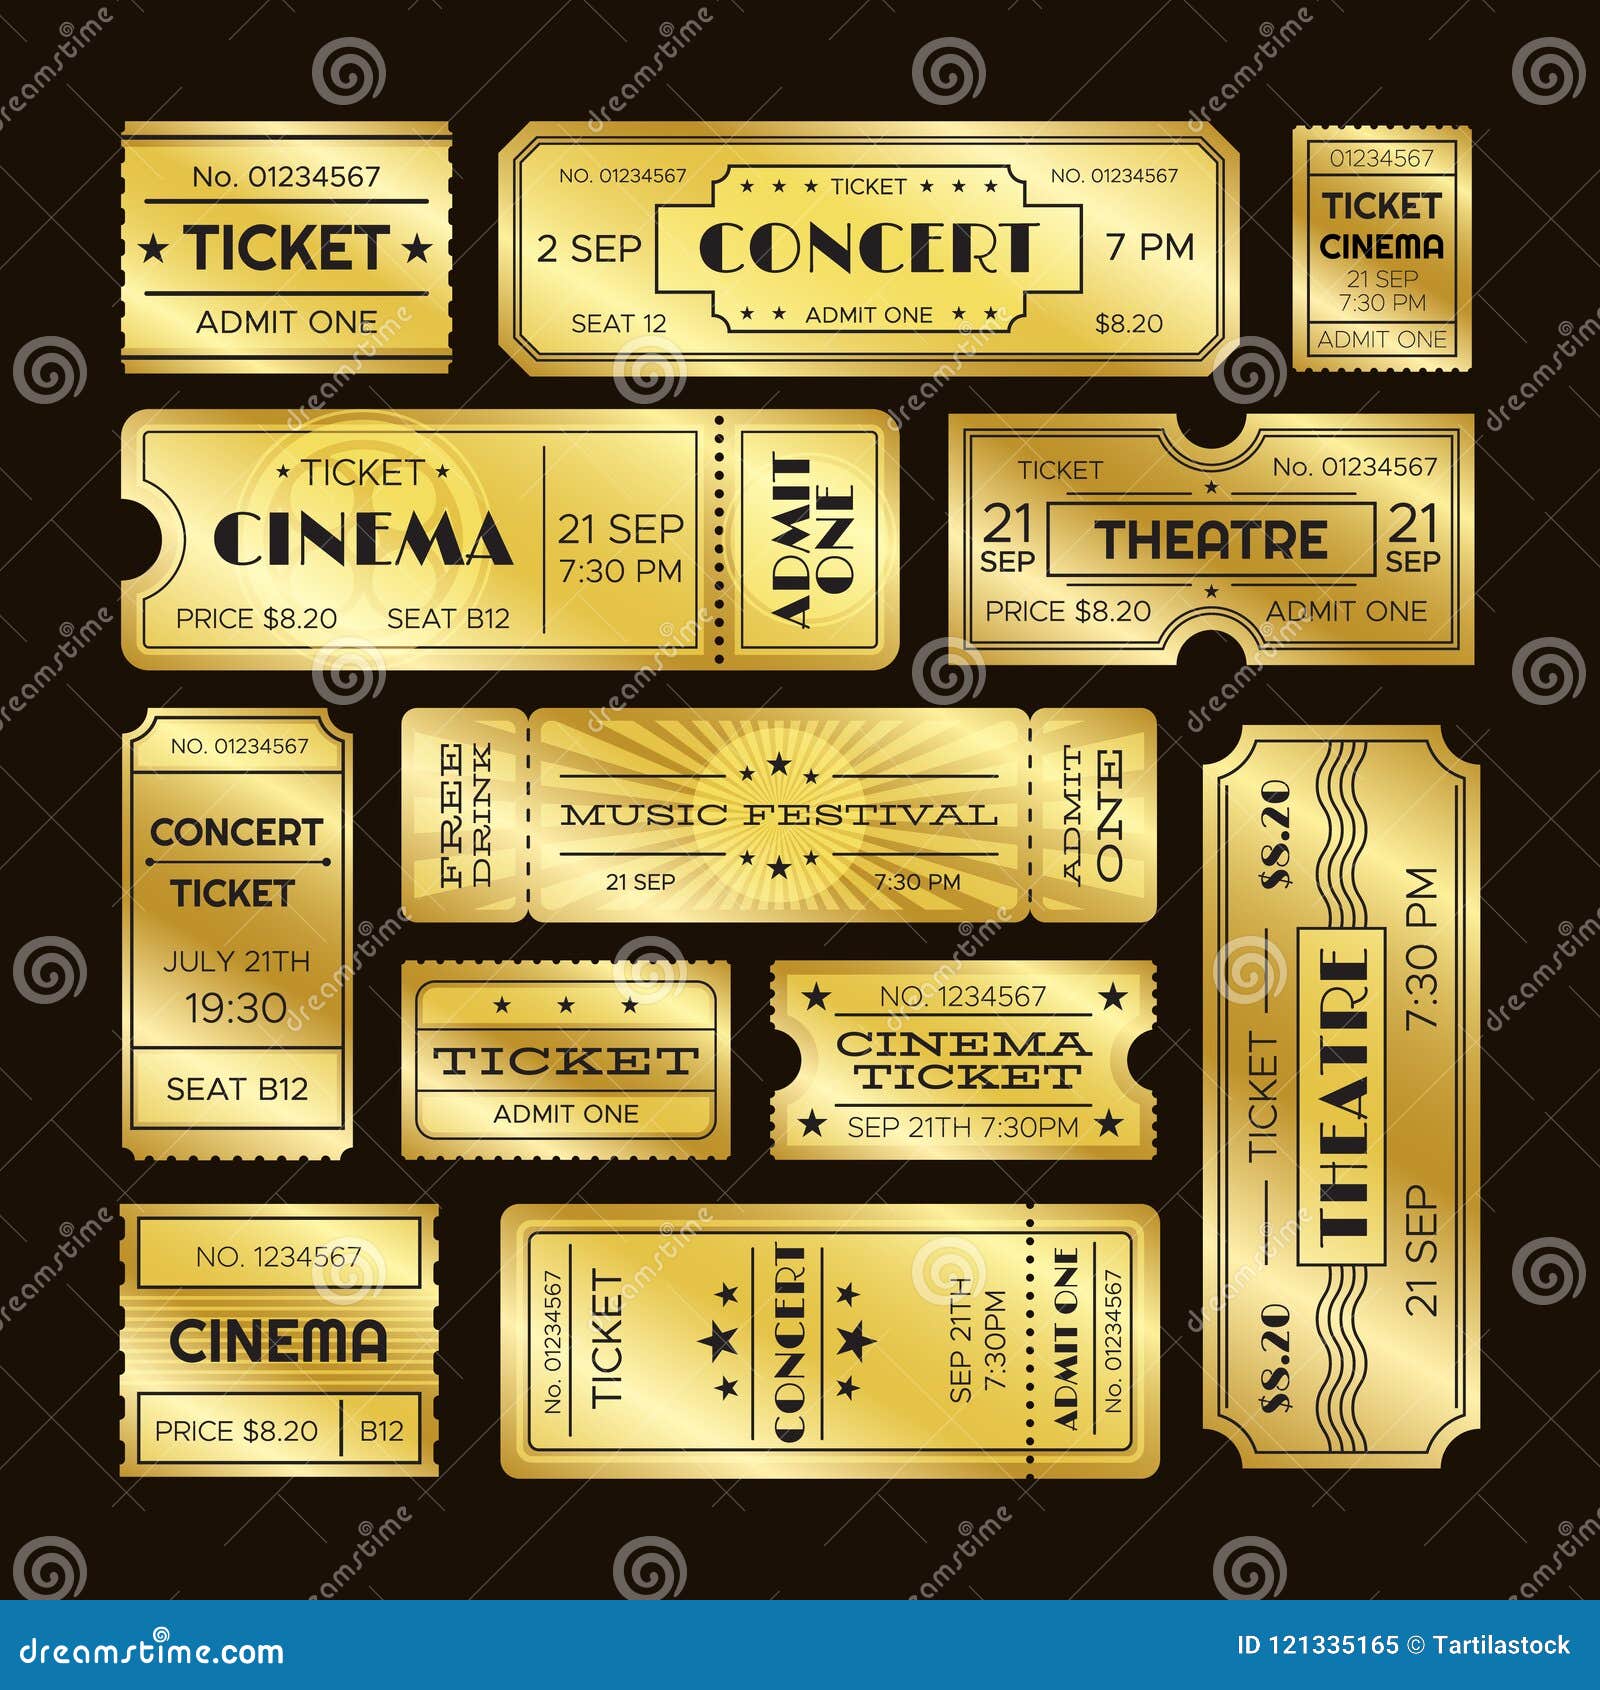 premiere cinema coupons online -